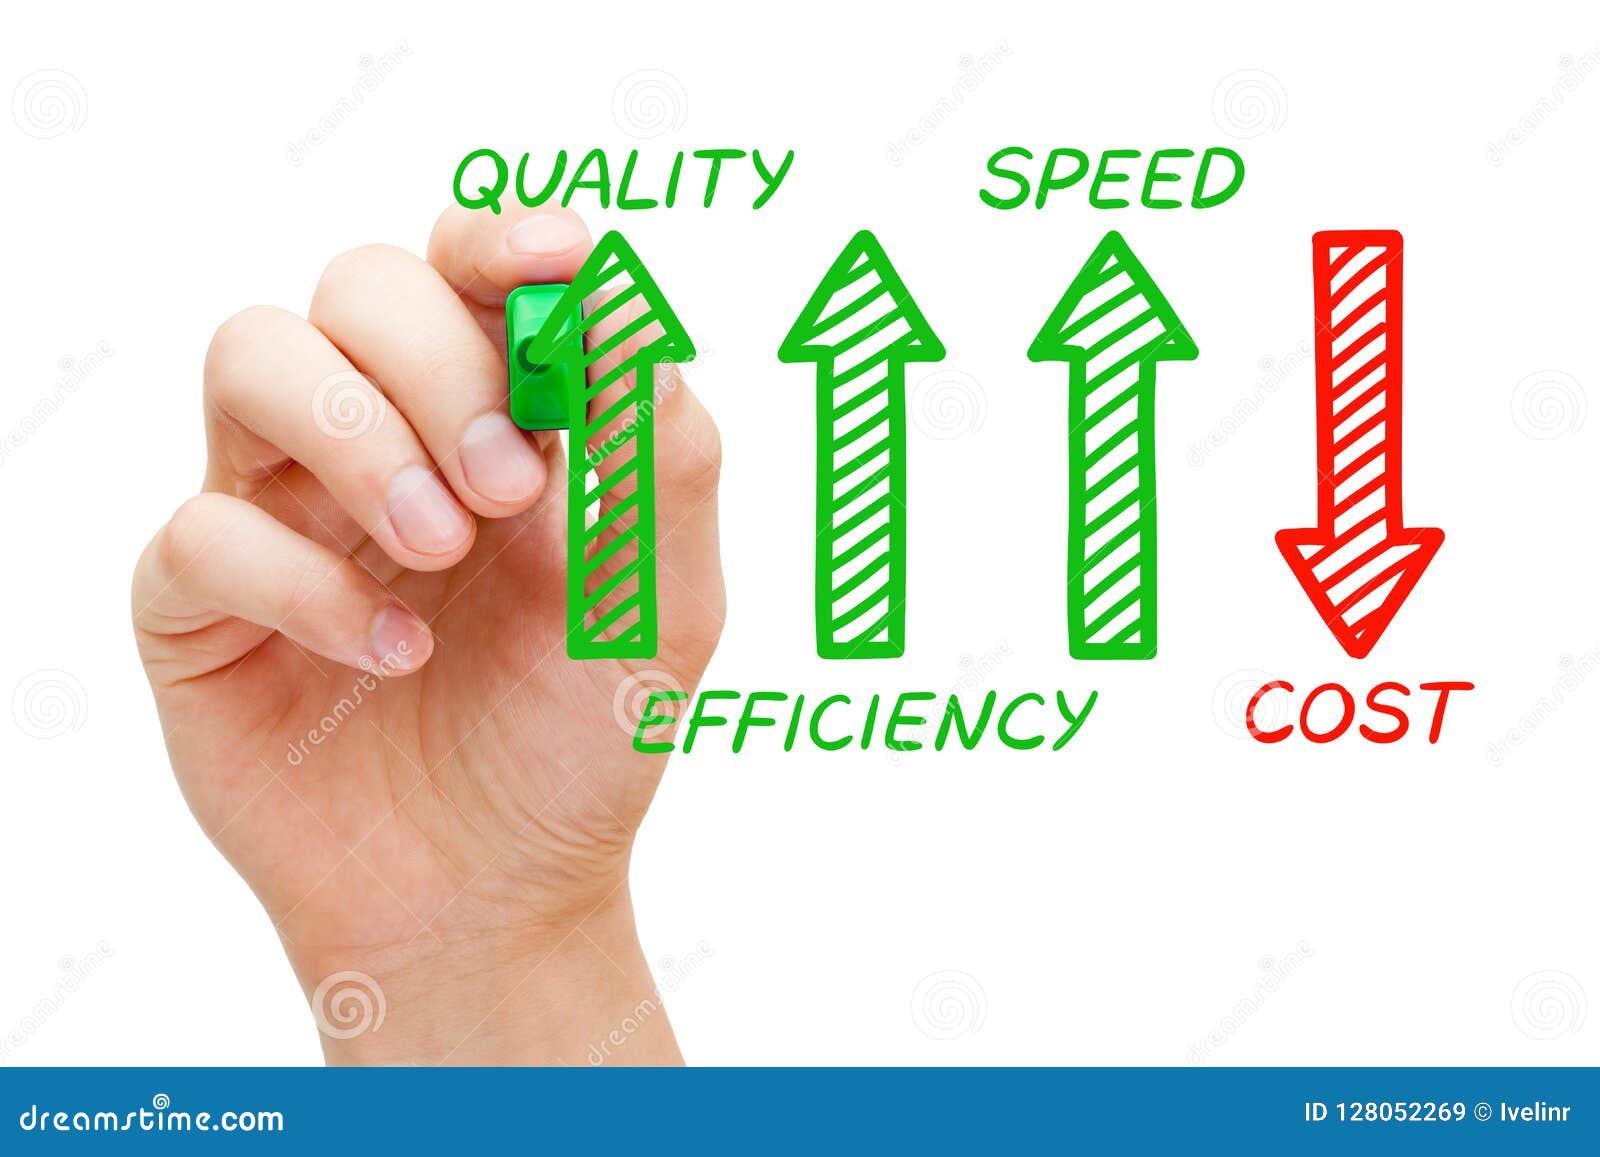 increased quality efficiency speed decreased cost